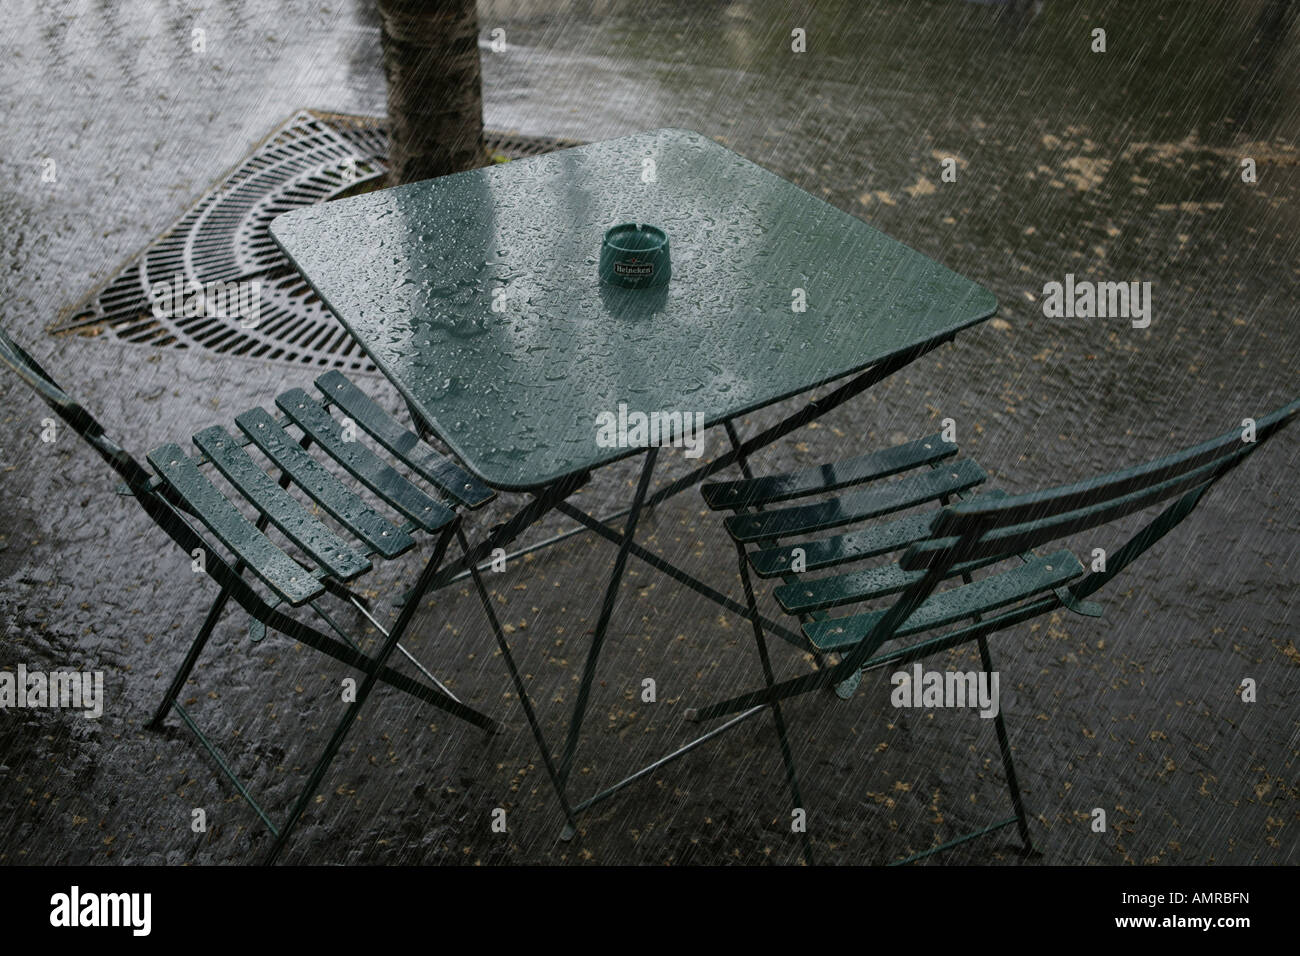 Garden furnitures in rainy weather Stock Photo